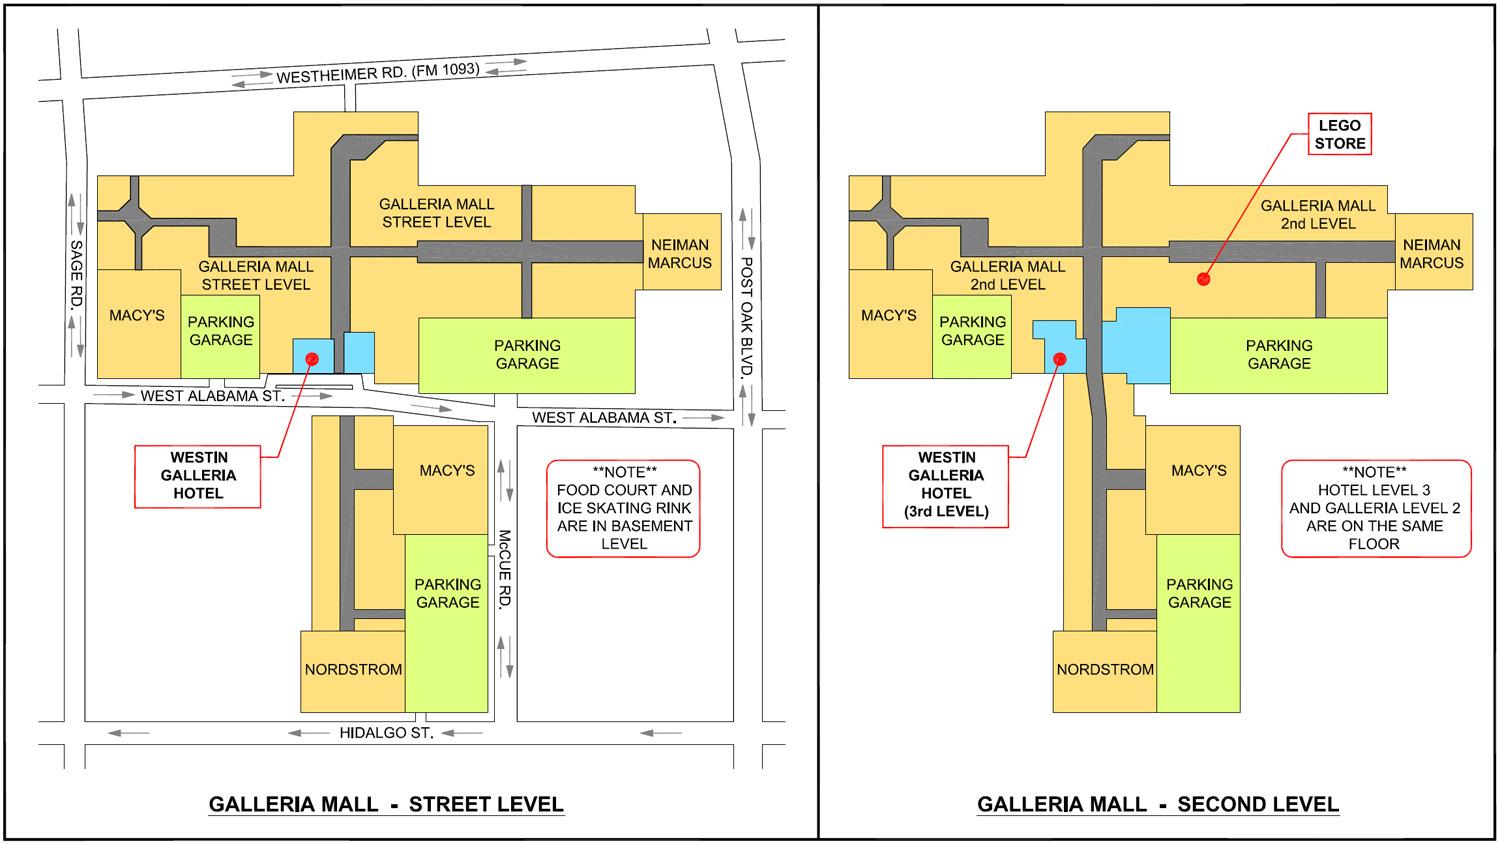 houston galleria mall map Galleria Mall Map Houston Galleria Mall Map Texas Usa houston galleria mall map